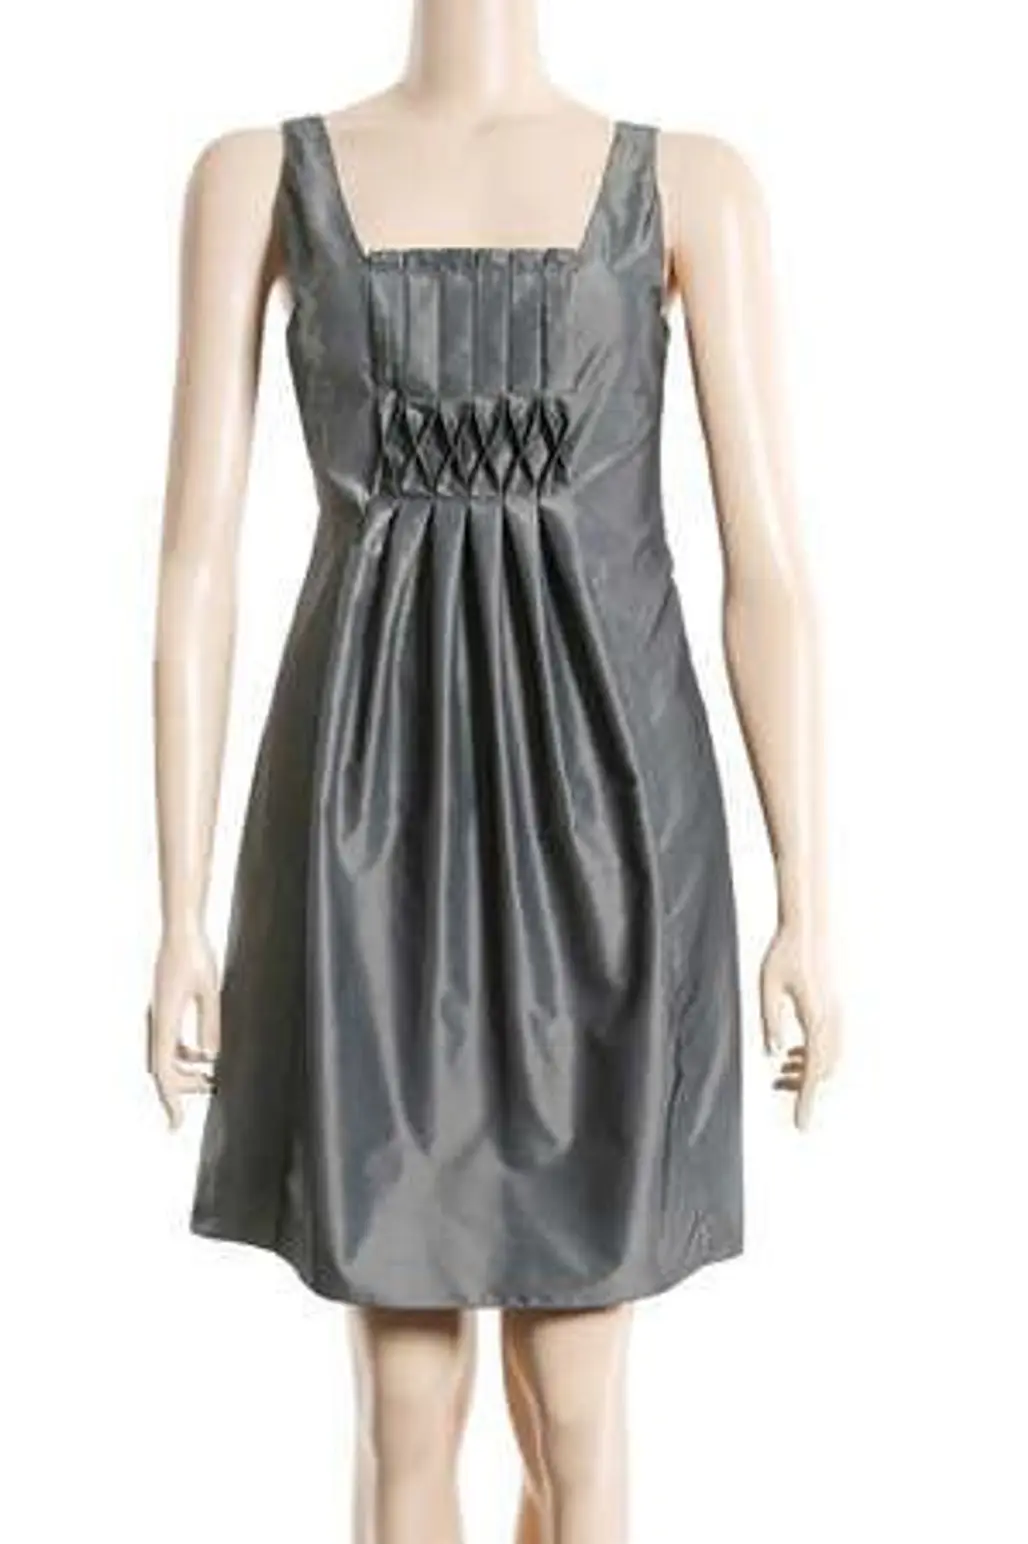 Metallic Grey Dress from Max Studio - $68